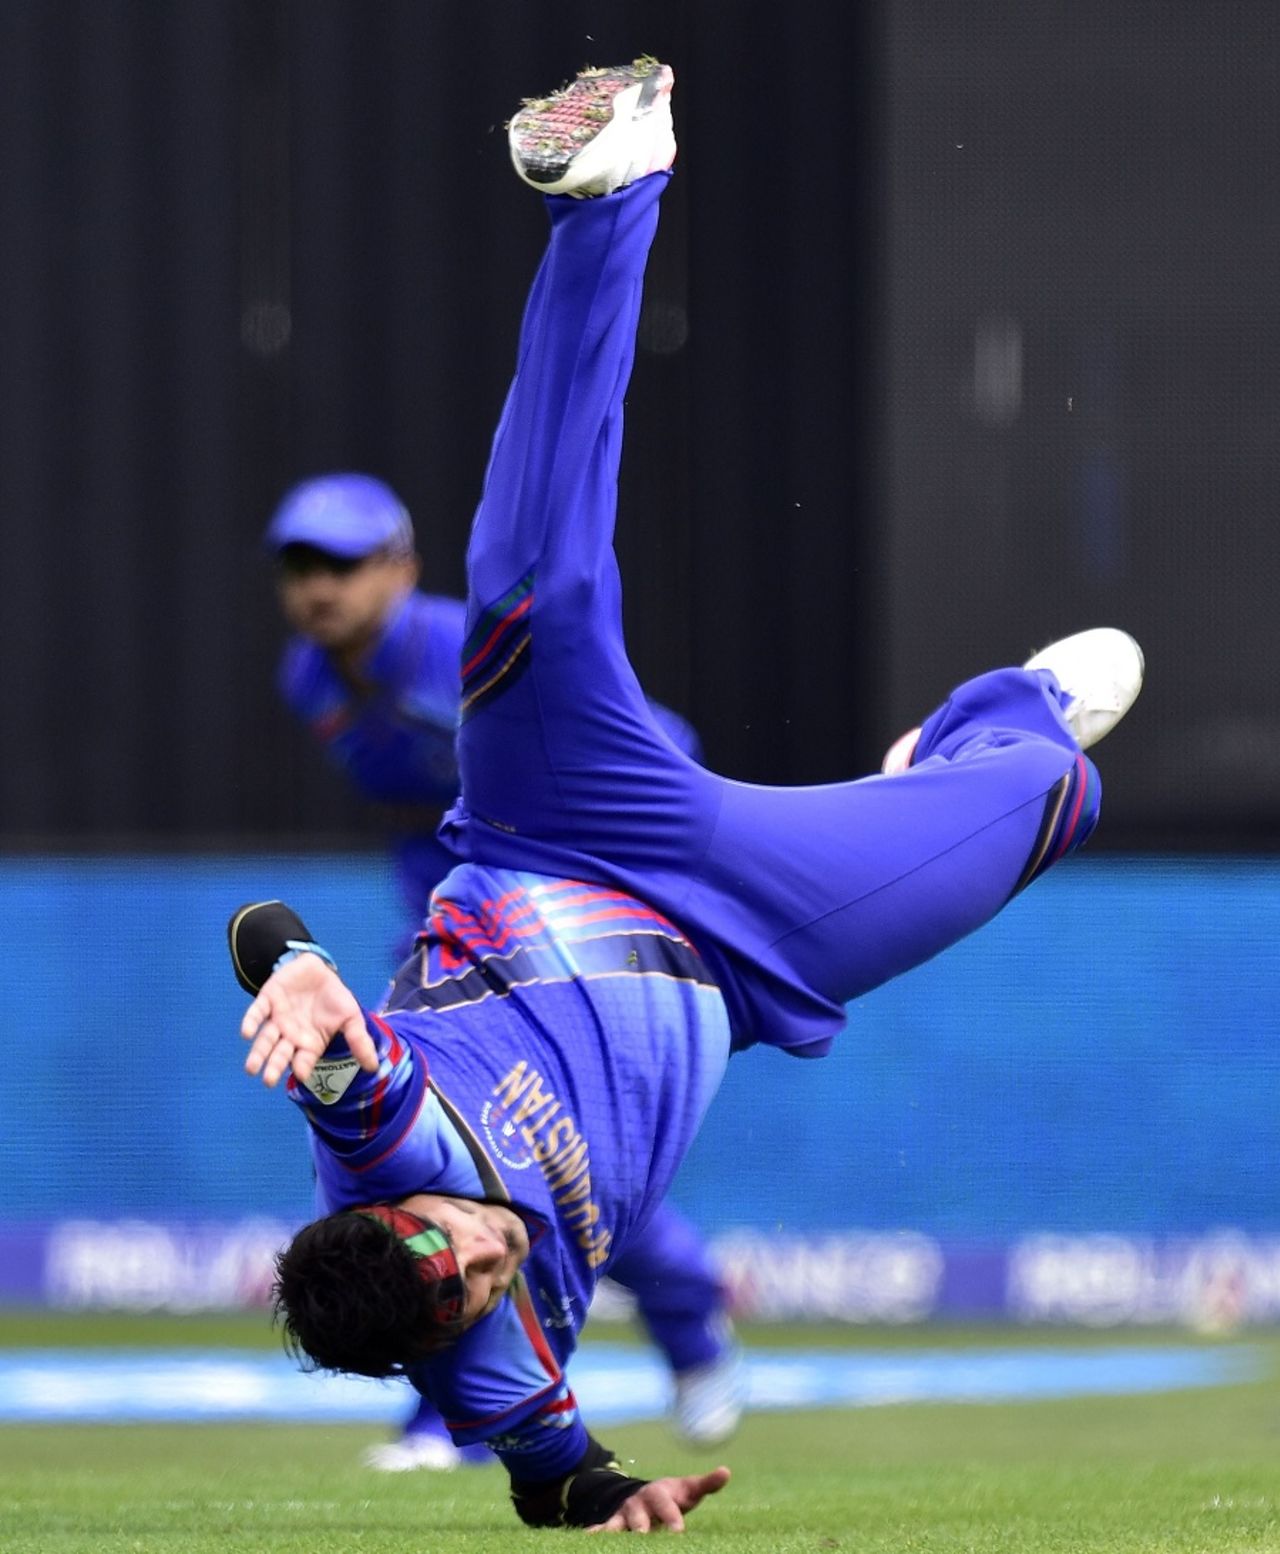 Hamid Hassan attempts a cartwheel after bowling Kumar Sangakkara, Afghanistan v Sri Lanka, World Cup 2015, Group A